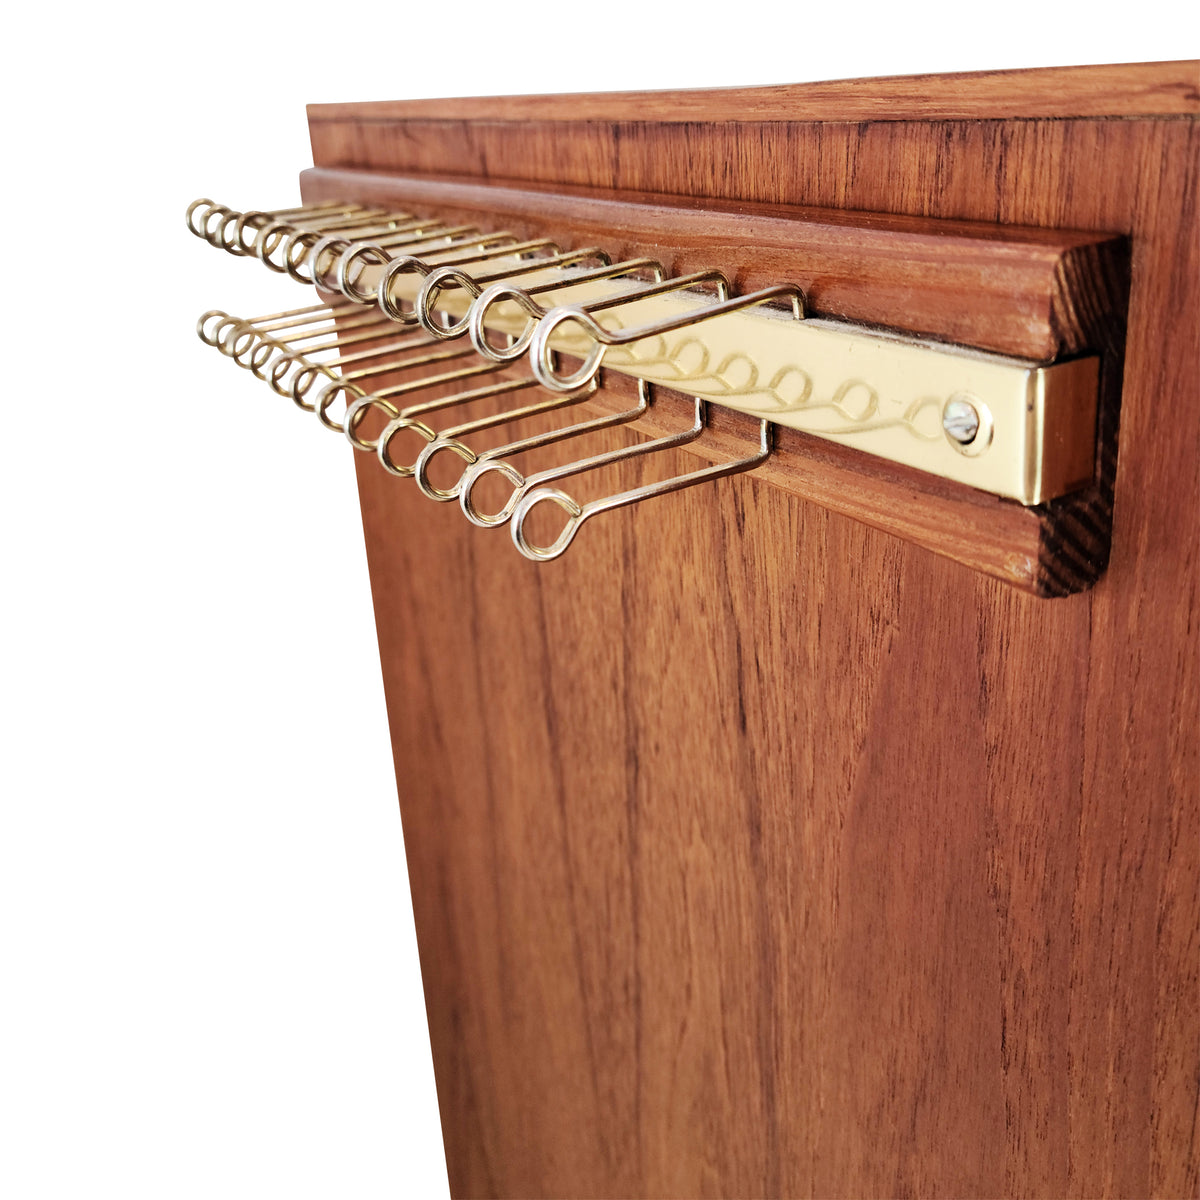 Teak Upright Dresser with Tie Rack